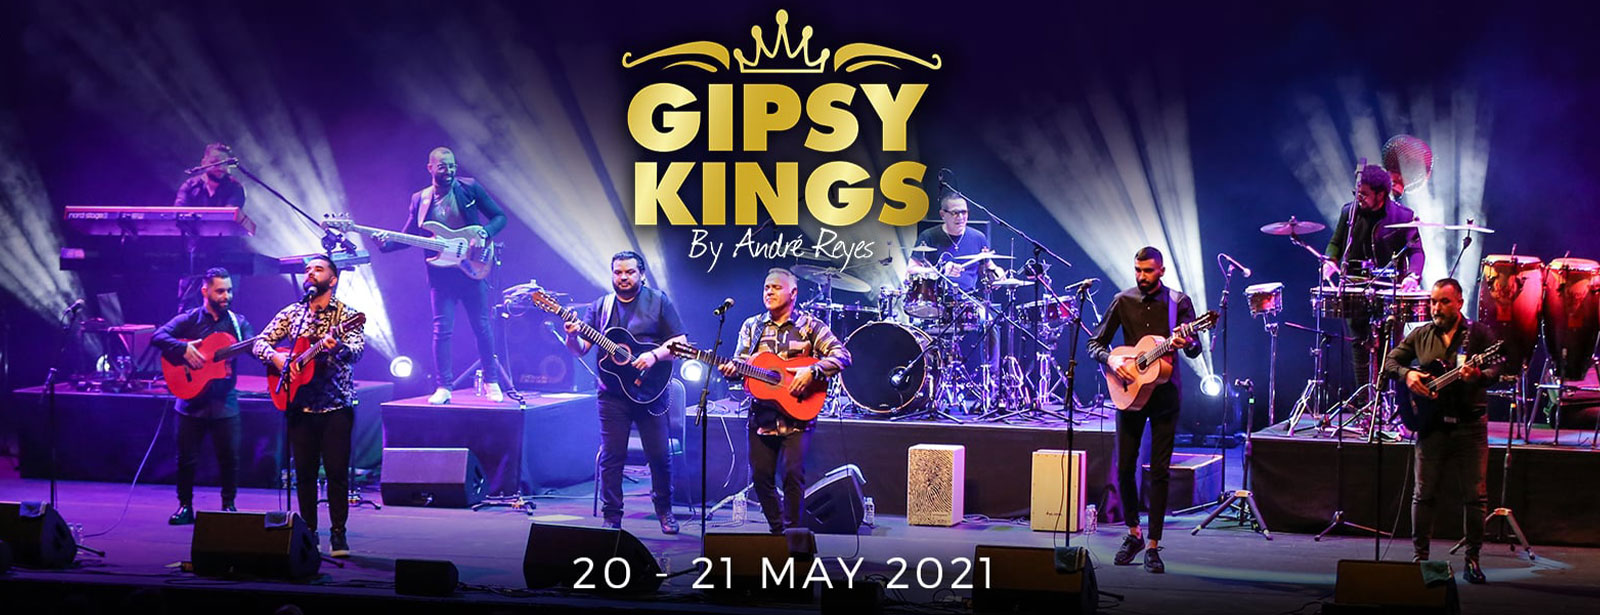 Gipsy Kings by Andre Reyes – May 2021 Performance - Coming Soon in UAE